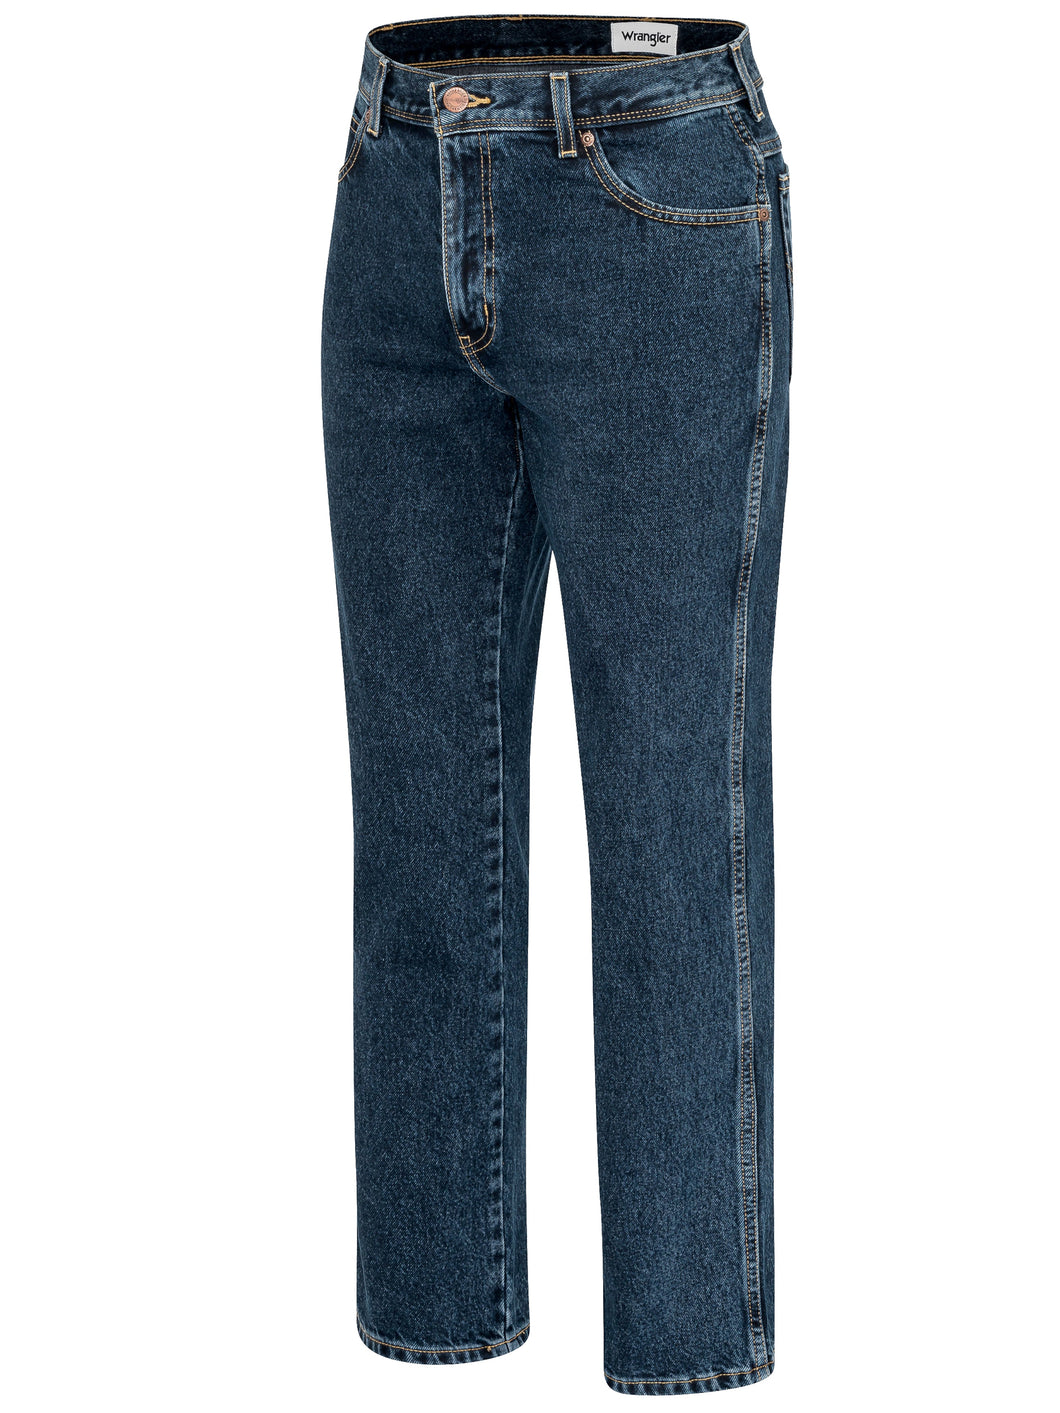 Wrangler TEXAS Herren Jeans Regular Fit W12104001 Blue Black mit GürtelJeans Baumwolle -  City-Kaufhaus Herber GmbH